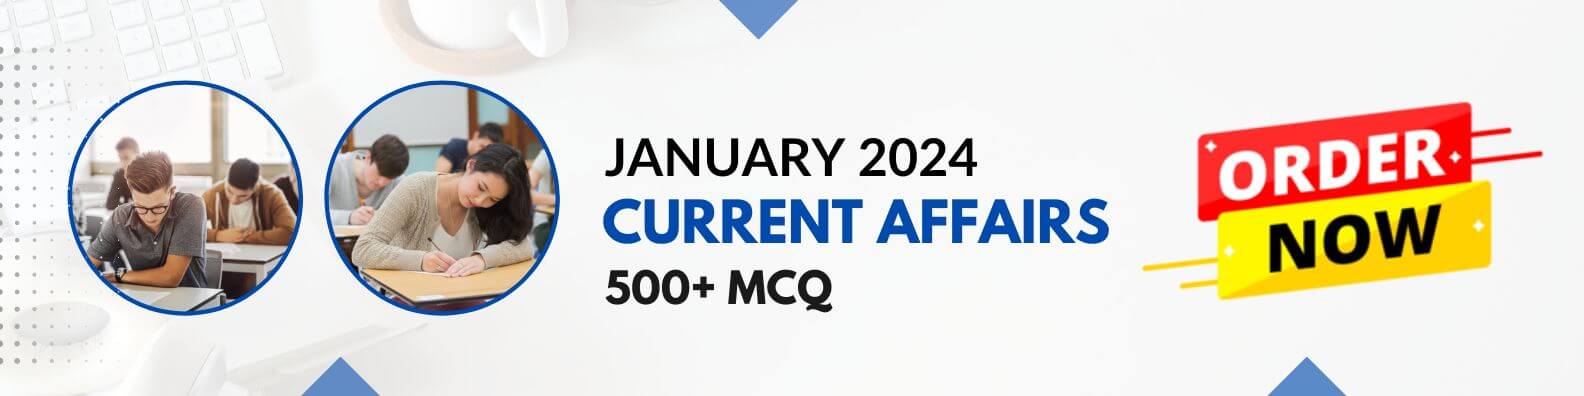 Current Affairs January 2024